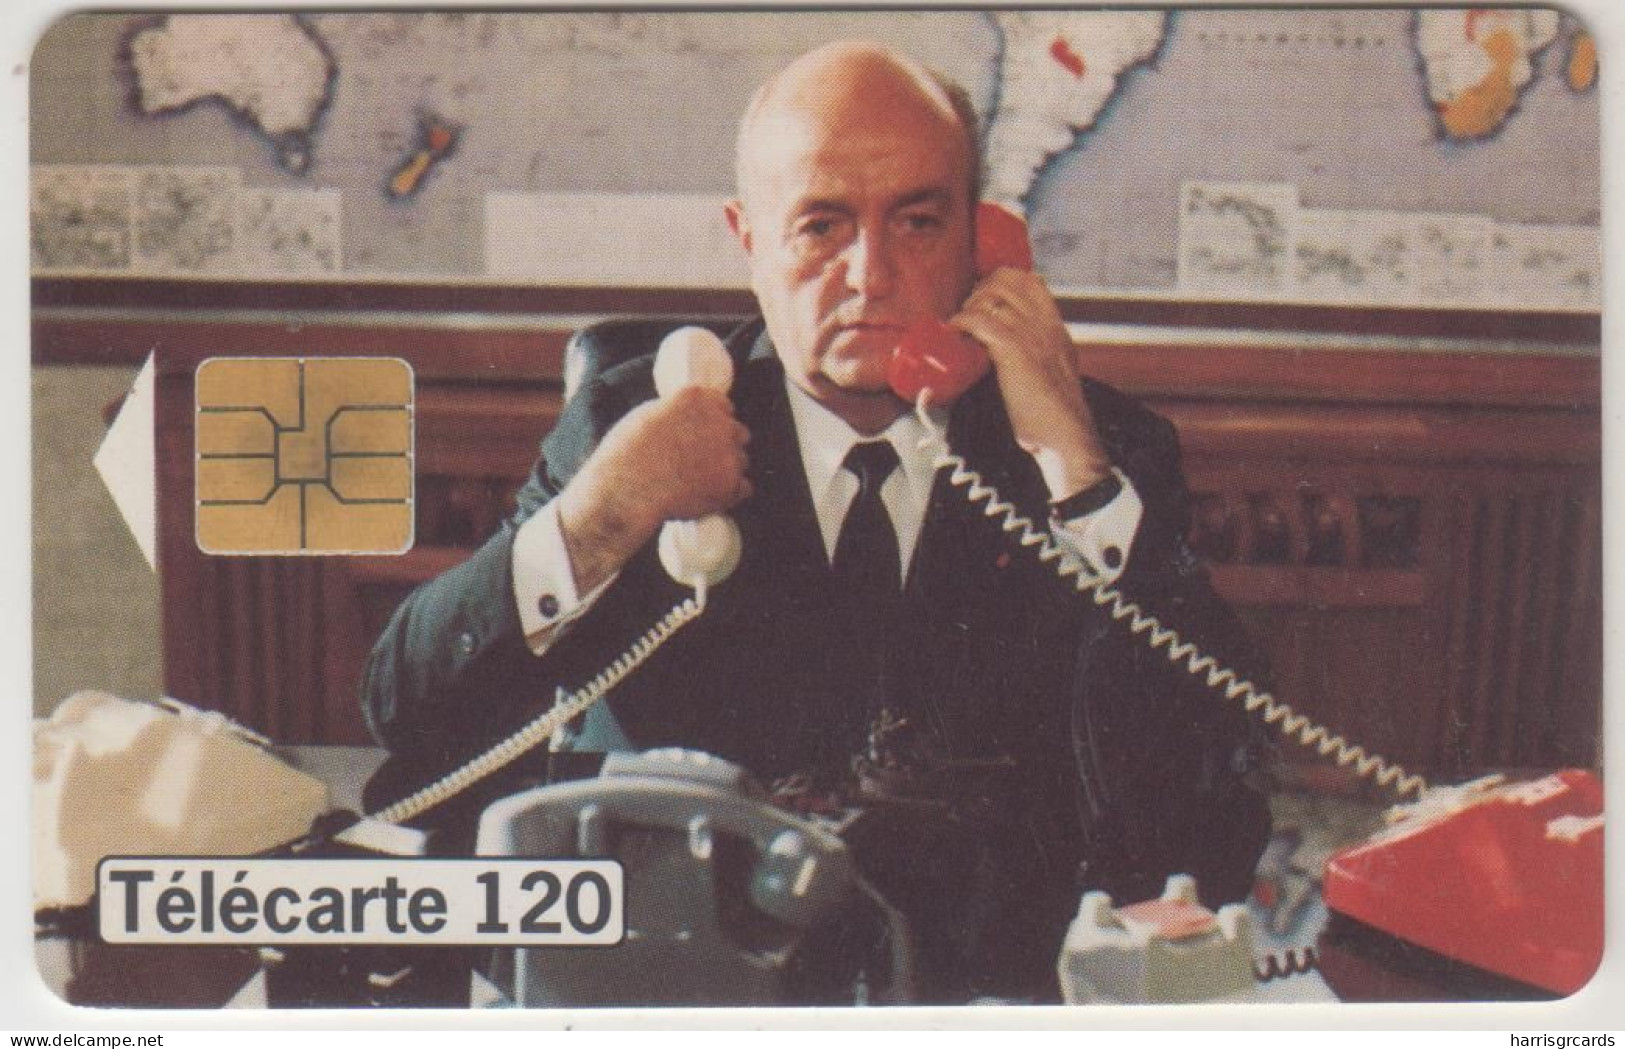 FRANCE - Telephone Et Cinema N.13 - Bernard Blier, Chip:SO3 (Module 44), 120 U, 02/99, Used - 1999